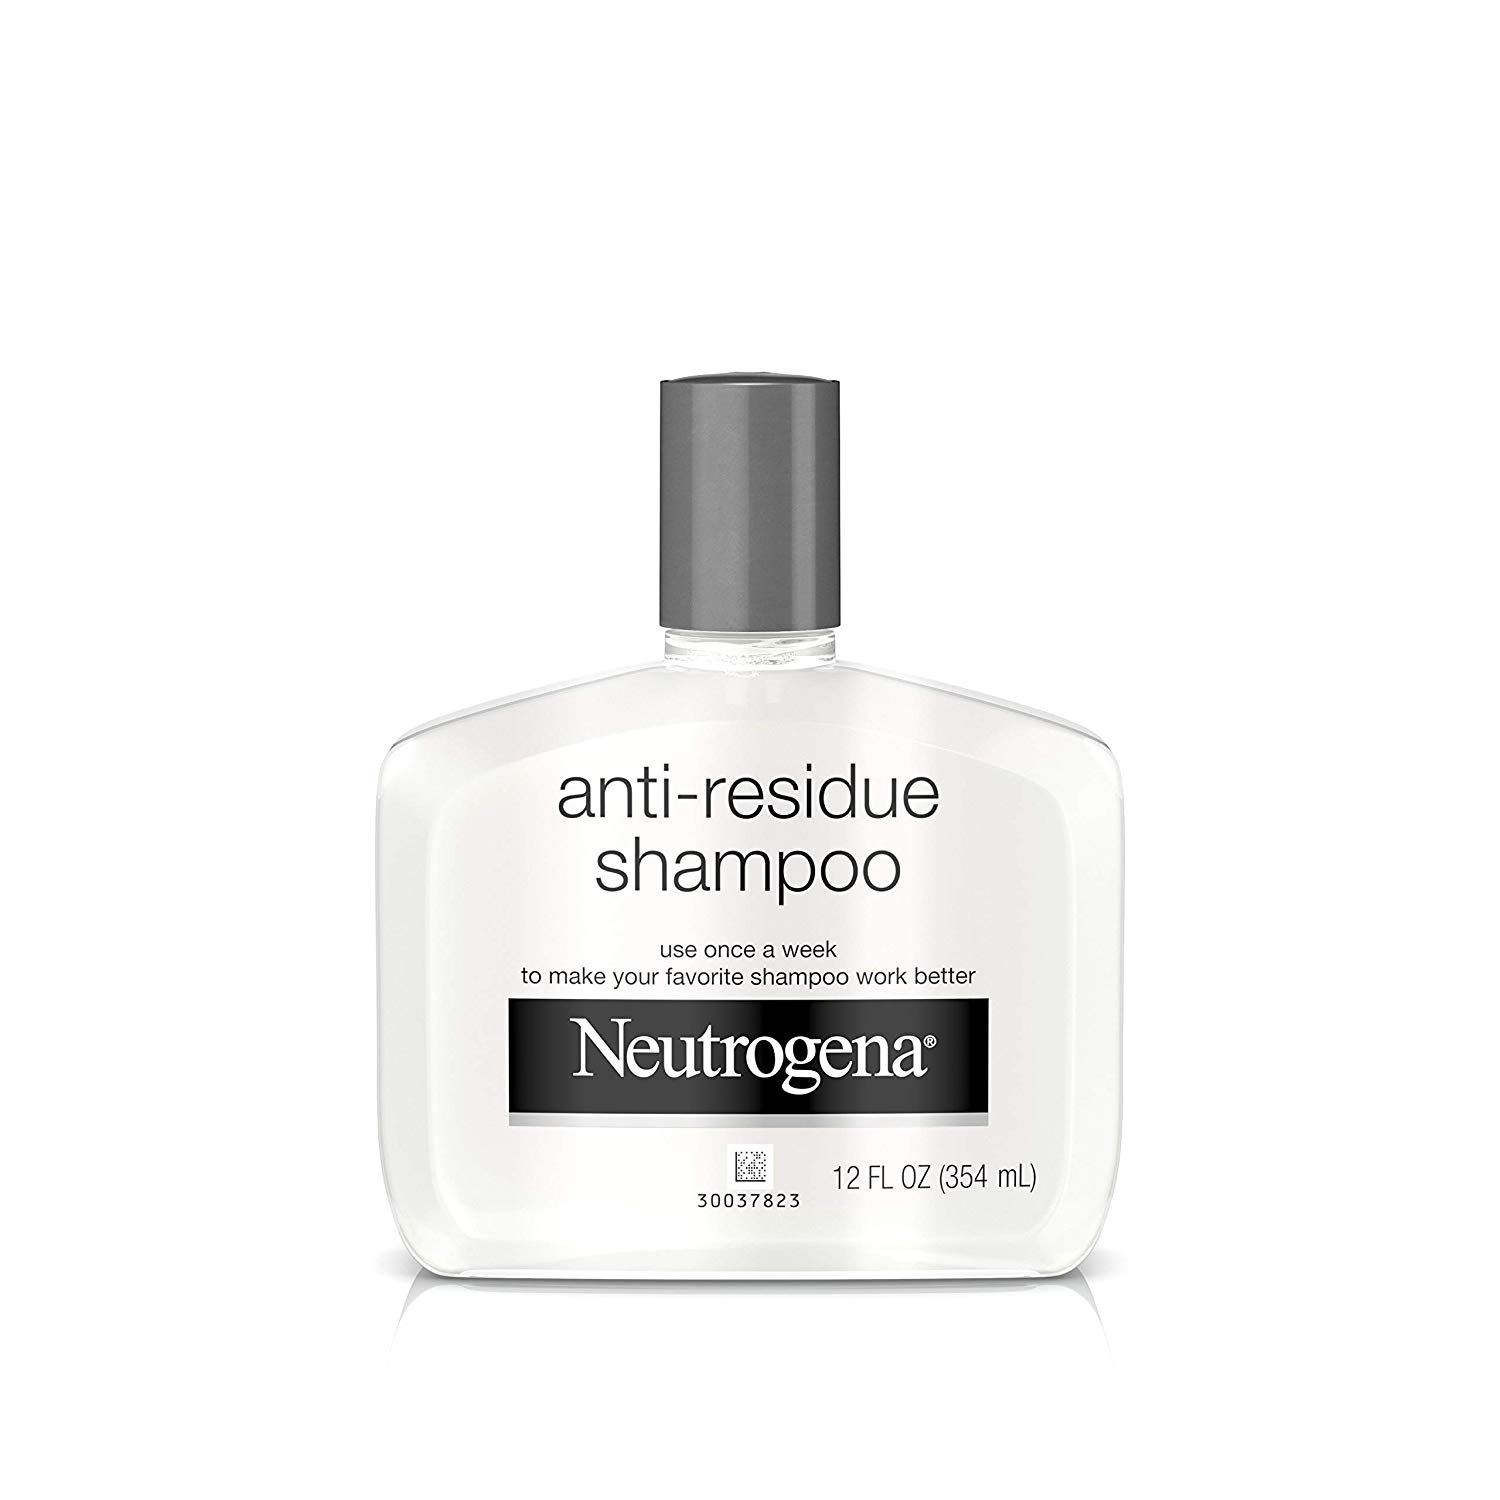 Neutrogena Anti-Residue Shampoo-Good For Oily Hair